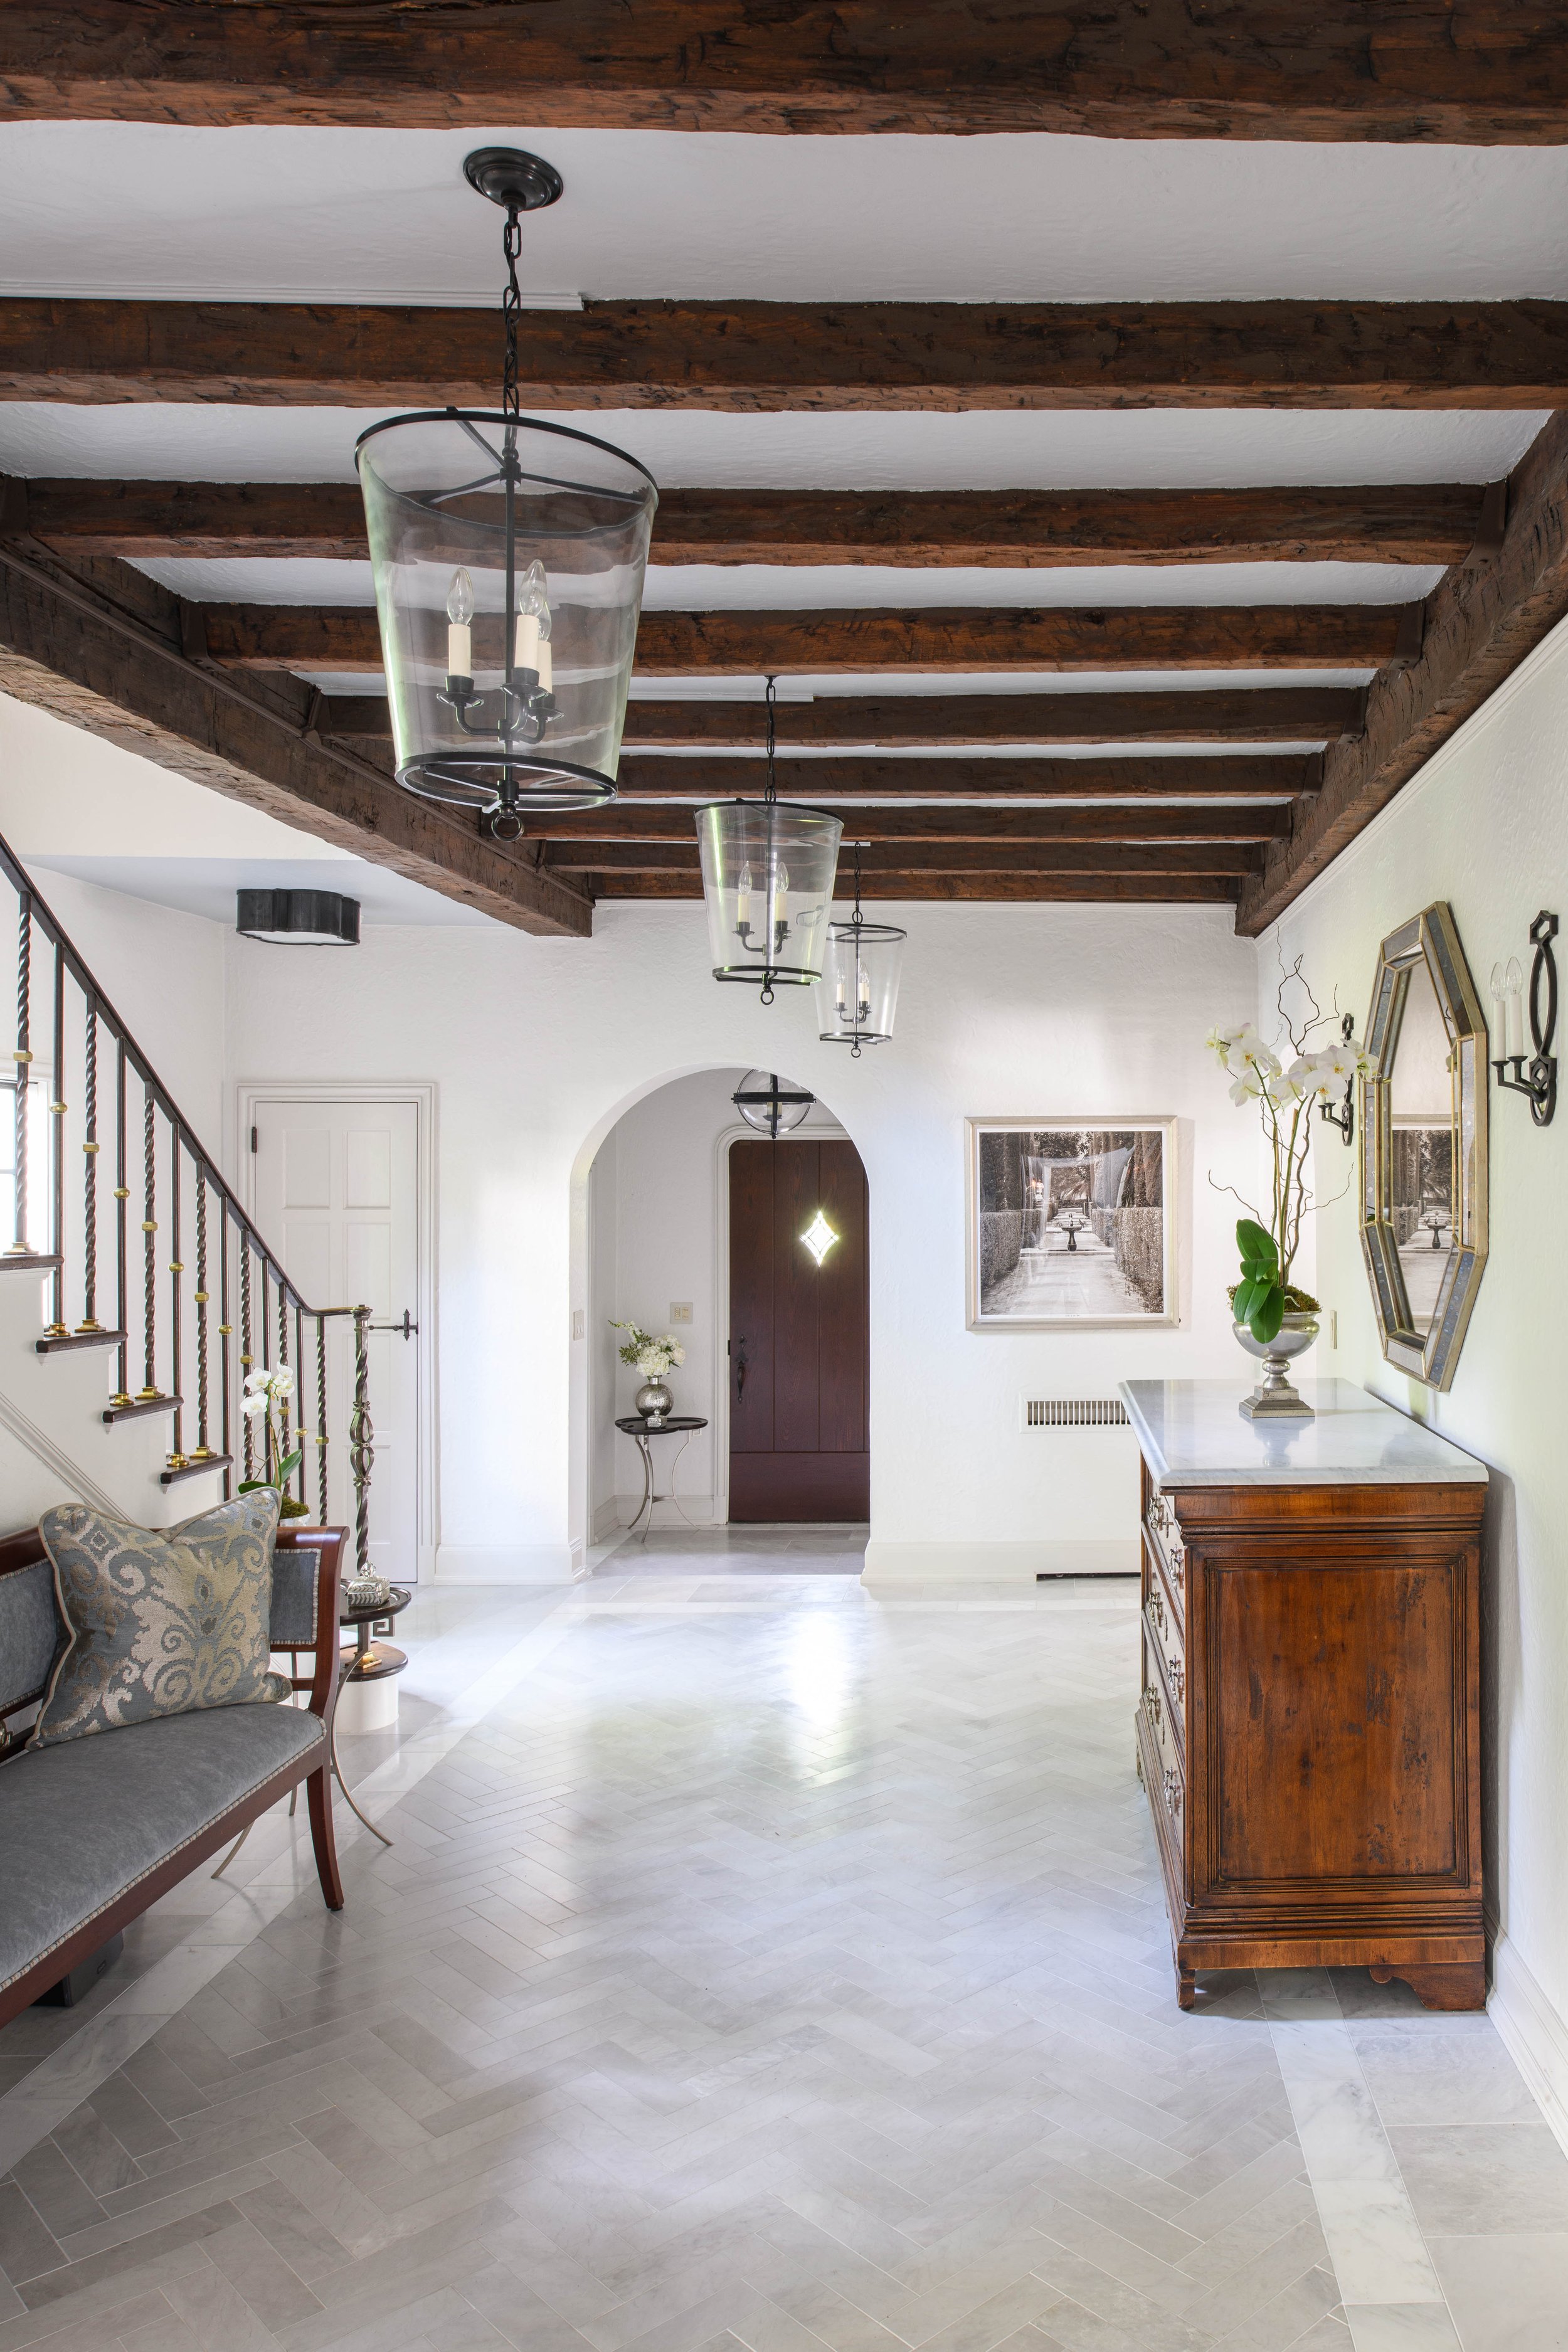 22-wood-ceiling-white-walkway-modern-accents-open-space-westechester-rinfret-interior-designs..jpg